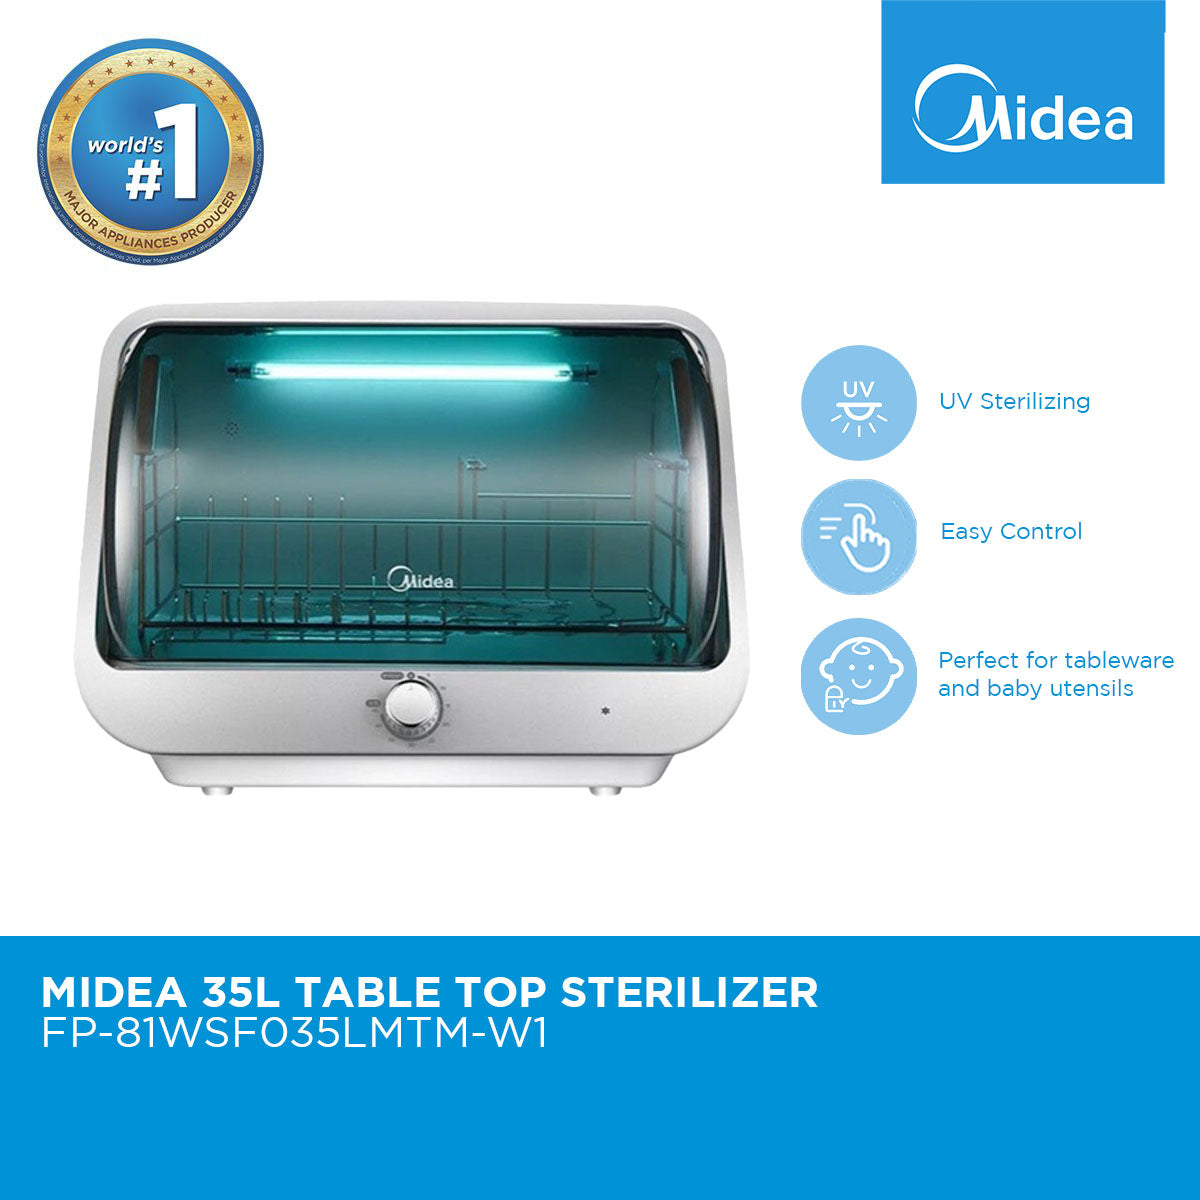 Midea 35L table top Sterilizer